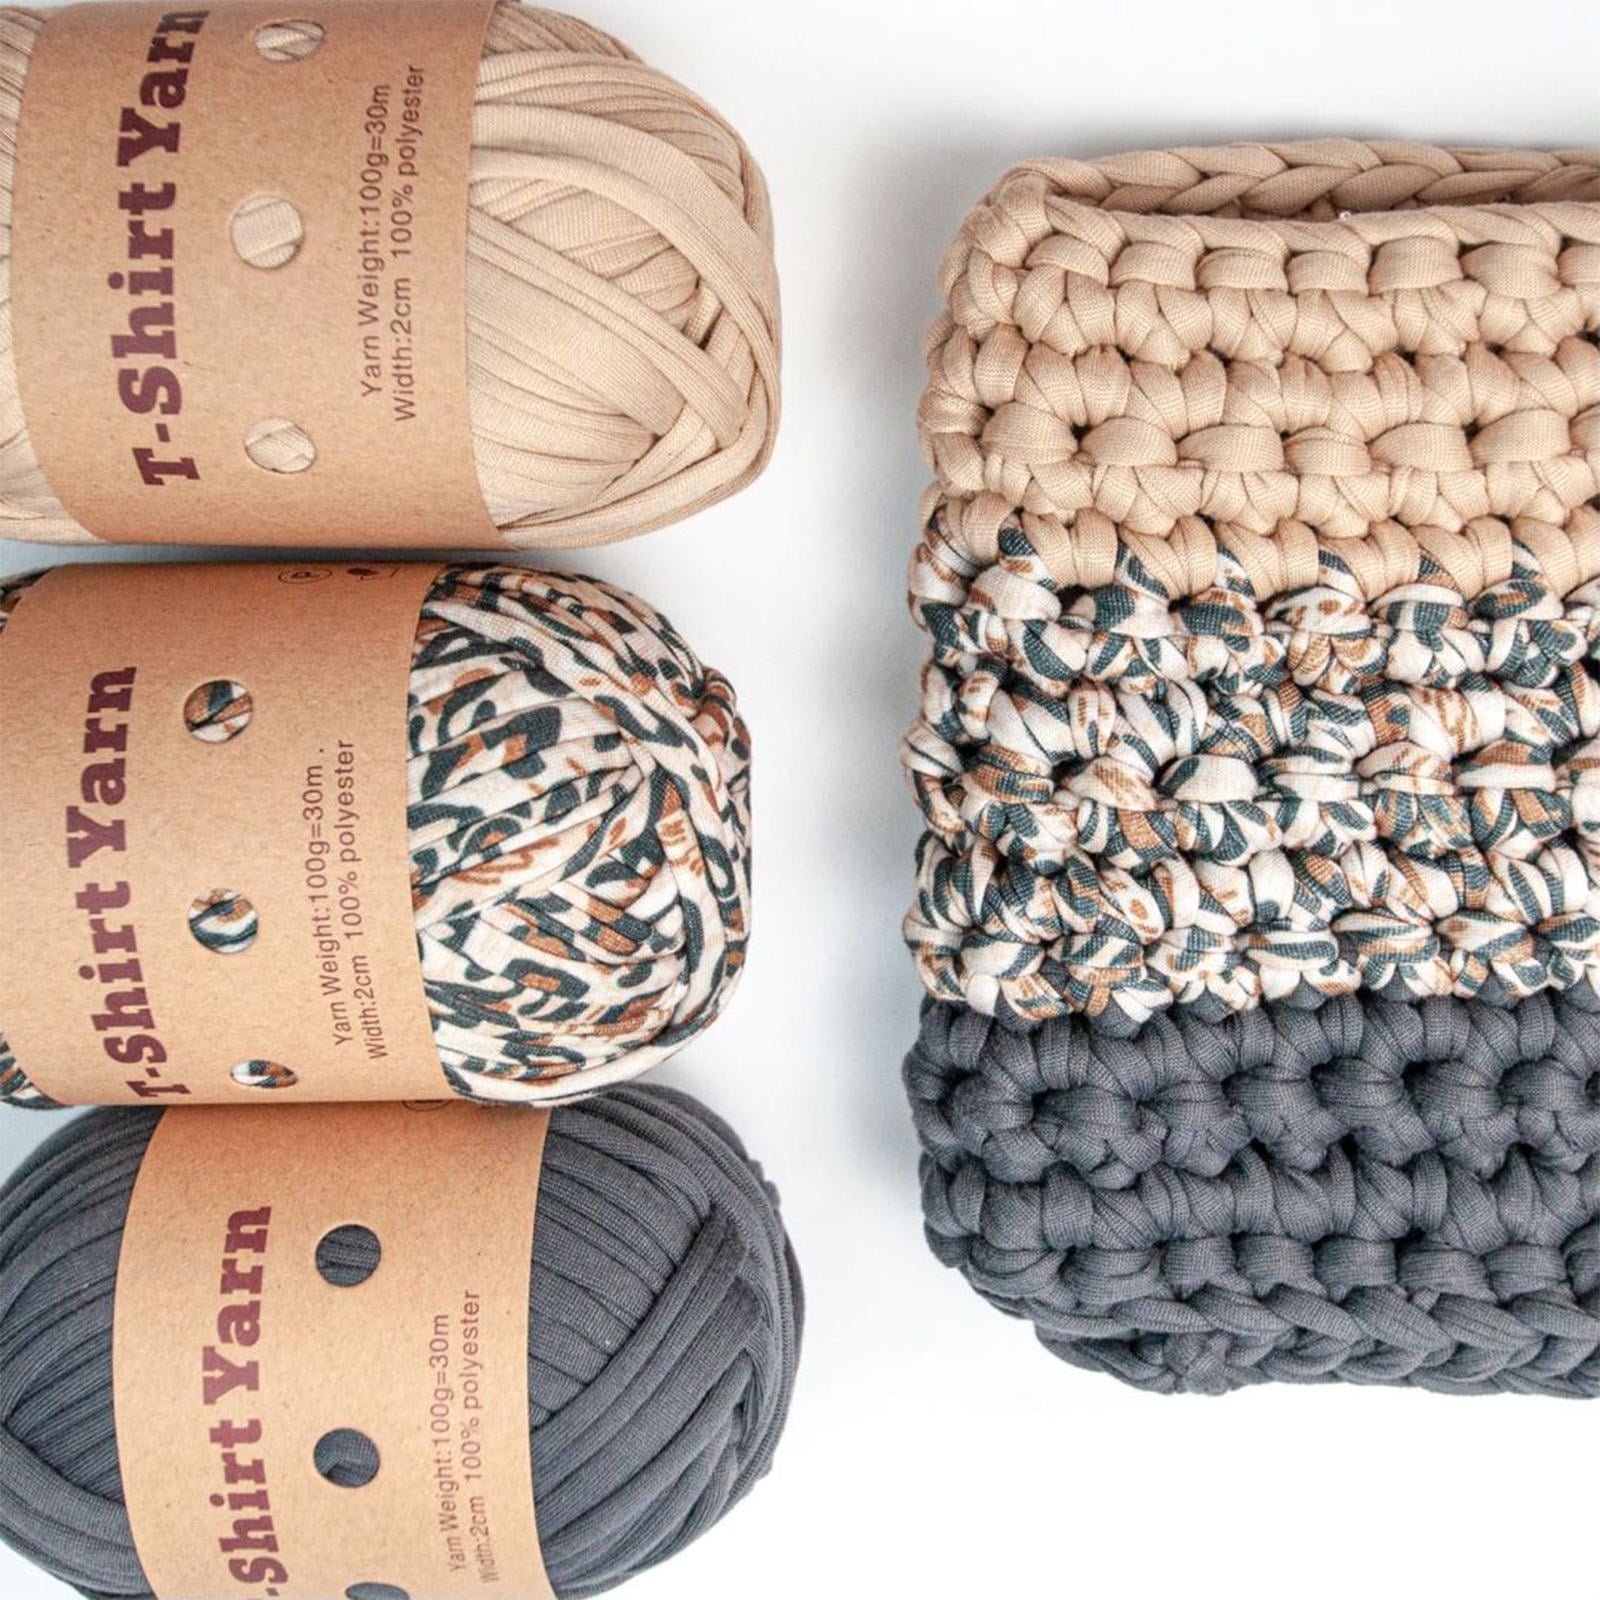 Nuanchu T-Shirt Yarn Fabric Knitting Yarn Spaghetti Yarn Craft in Approx.  121.4 Yards/ 111 Meter Long for Hand DIY Bag